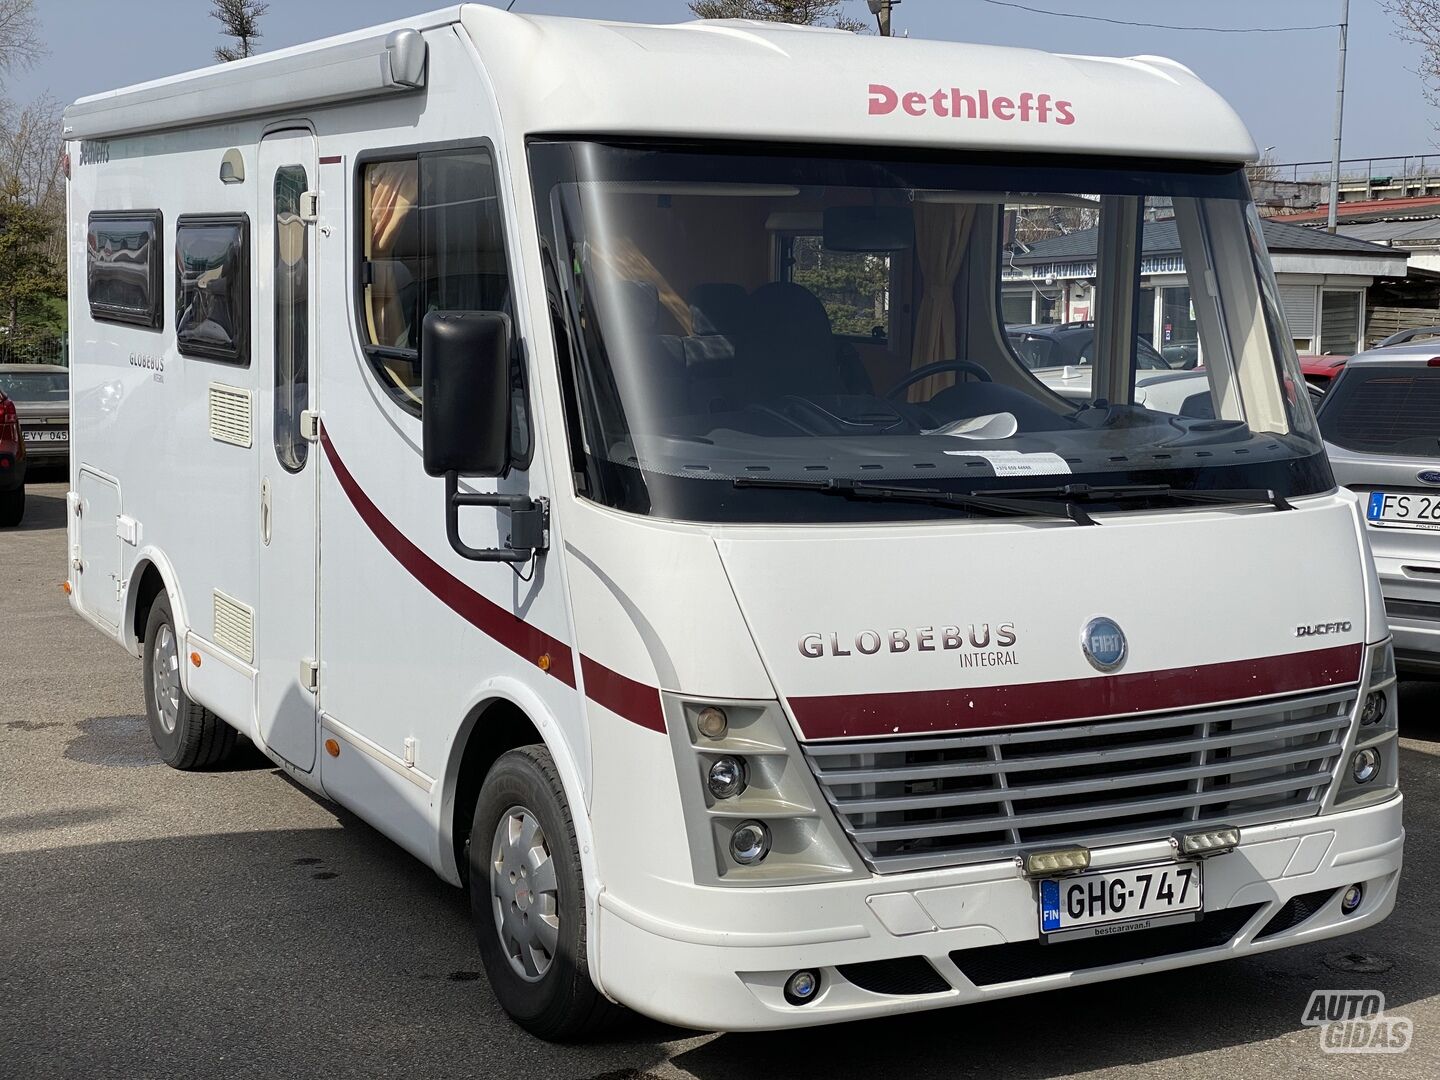 Dethleffs Globebus integral 2007 m Turistinis automobilis